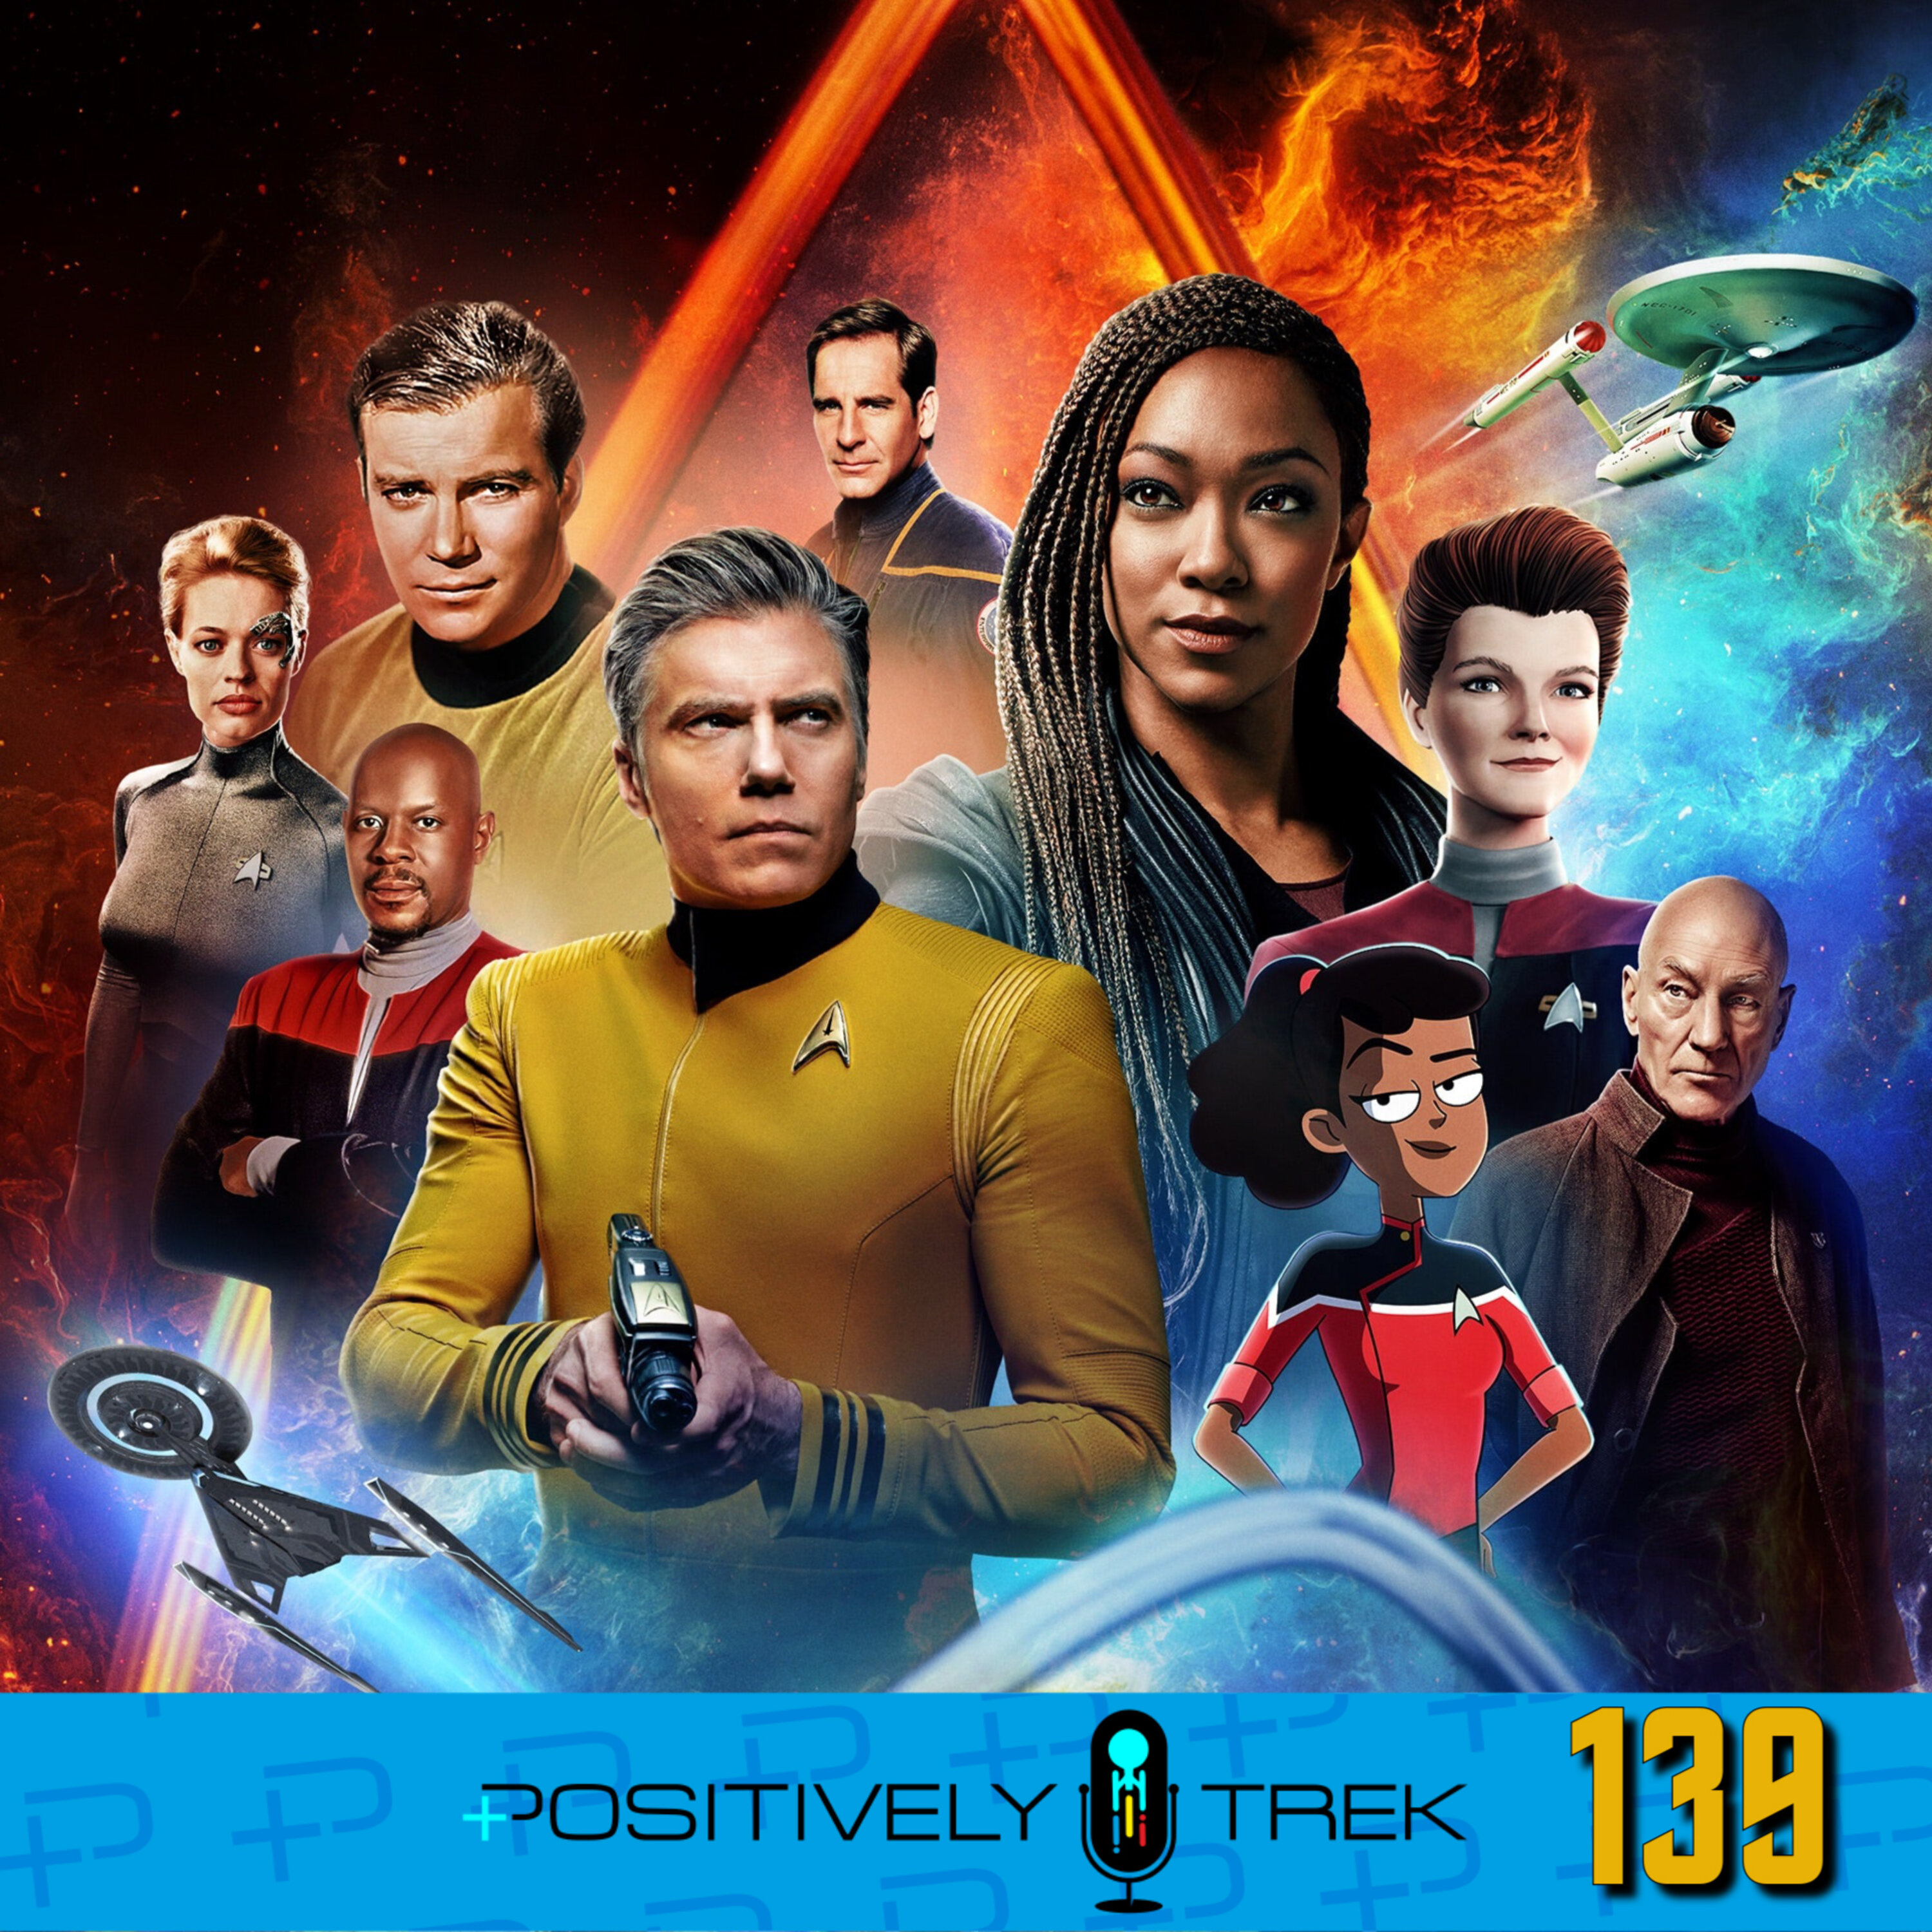 Star Trek Day 2021 Image